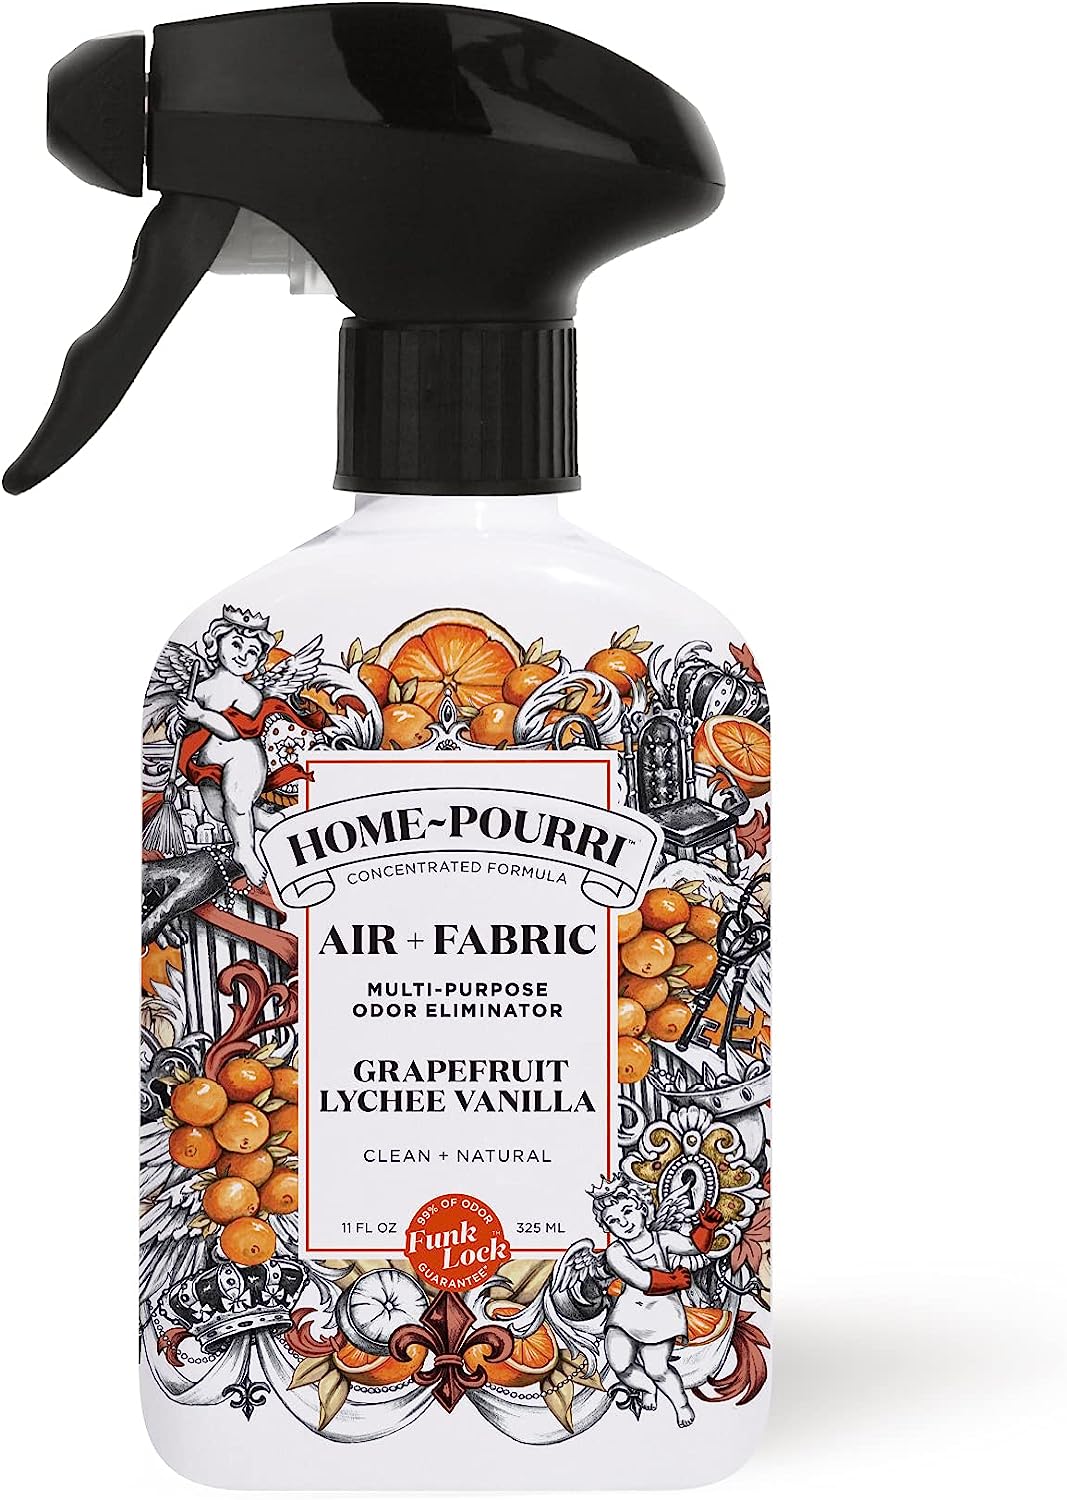 Home-Pourri Air + Fabric Multi-Purpose Odor [...]